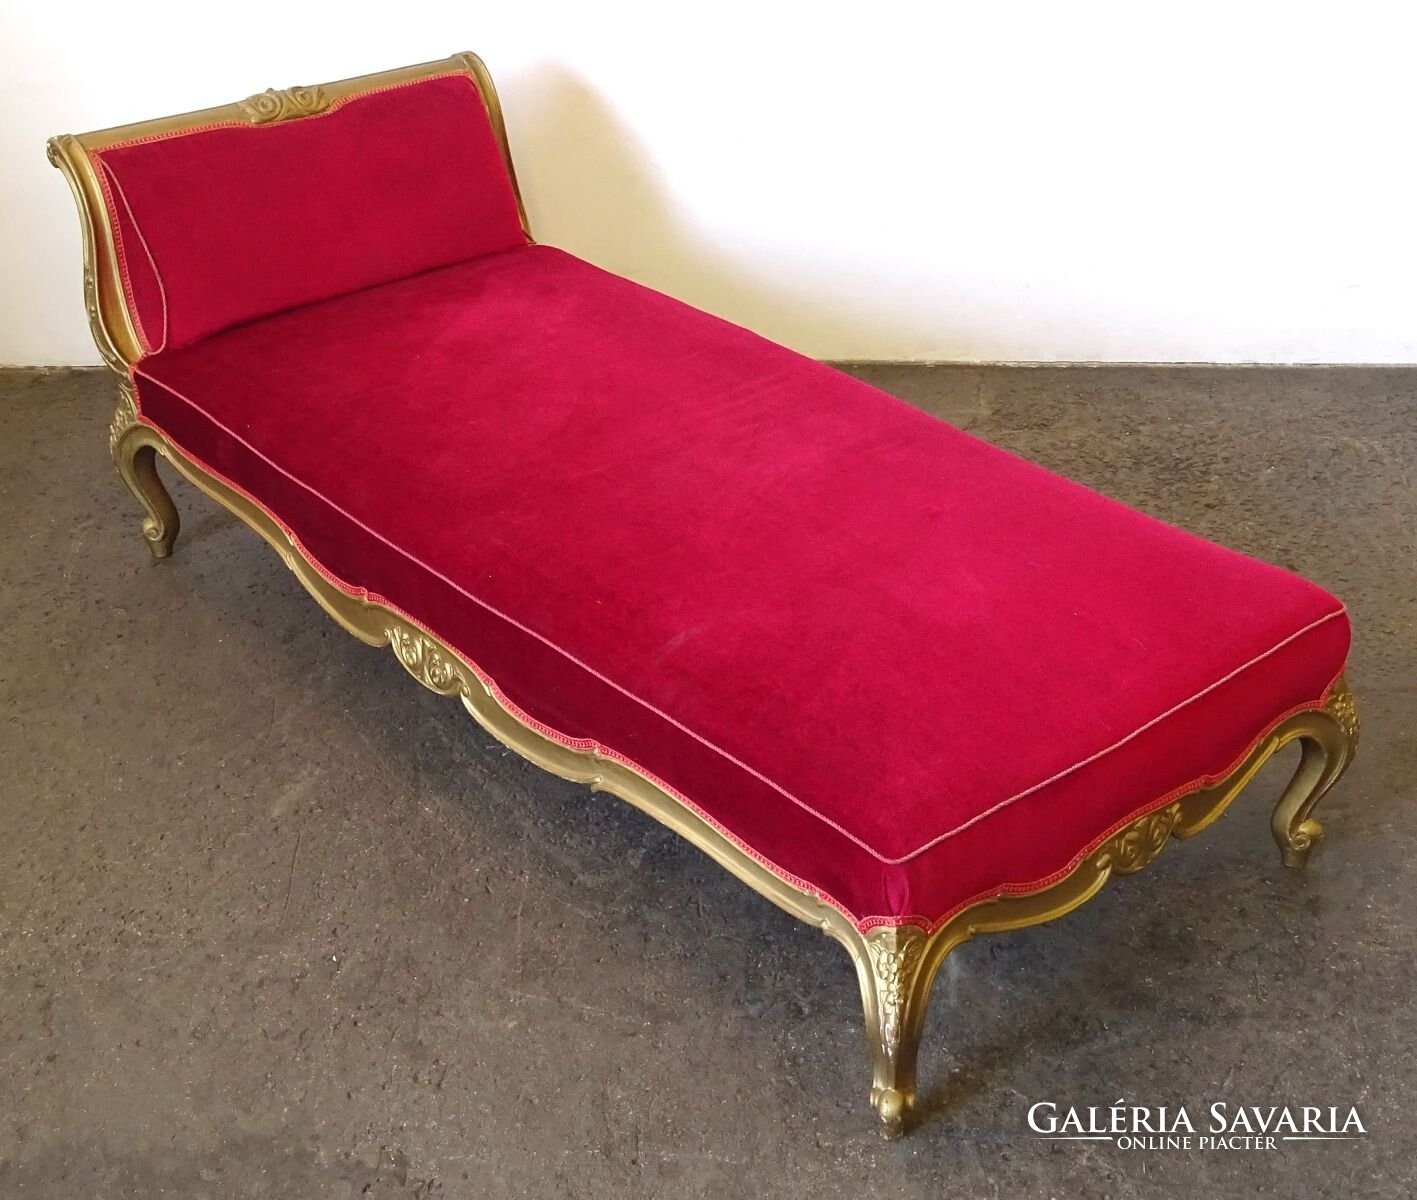 0U695 Antik aranyozott barokk szófa kerevet - Furniture | Galeria Savaria online antique marketplace - Buy or sell antique, vintage items and artworks